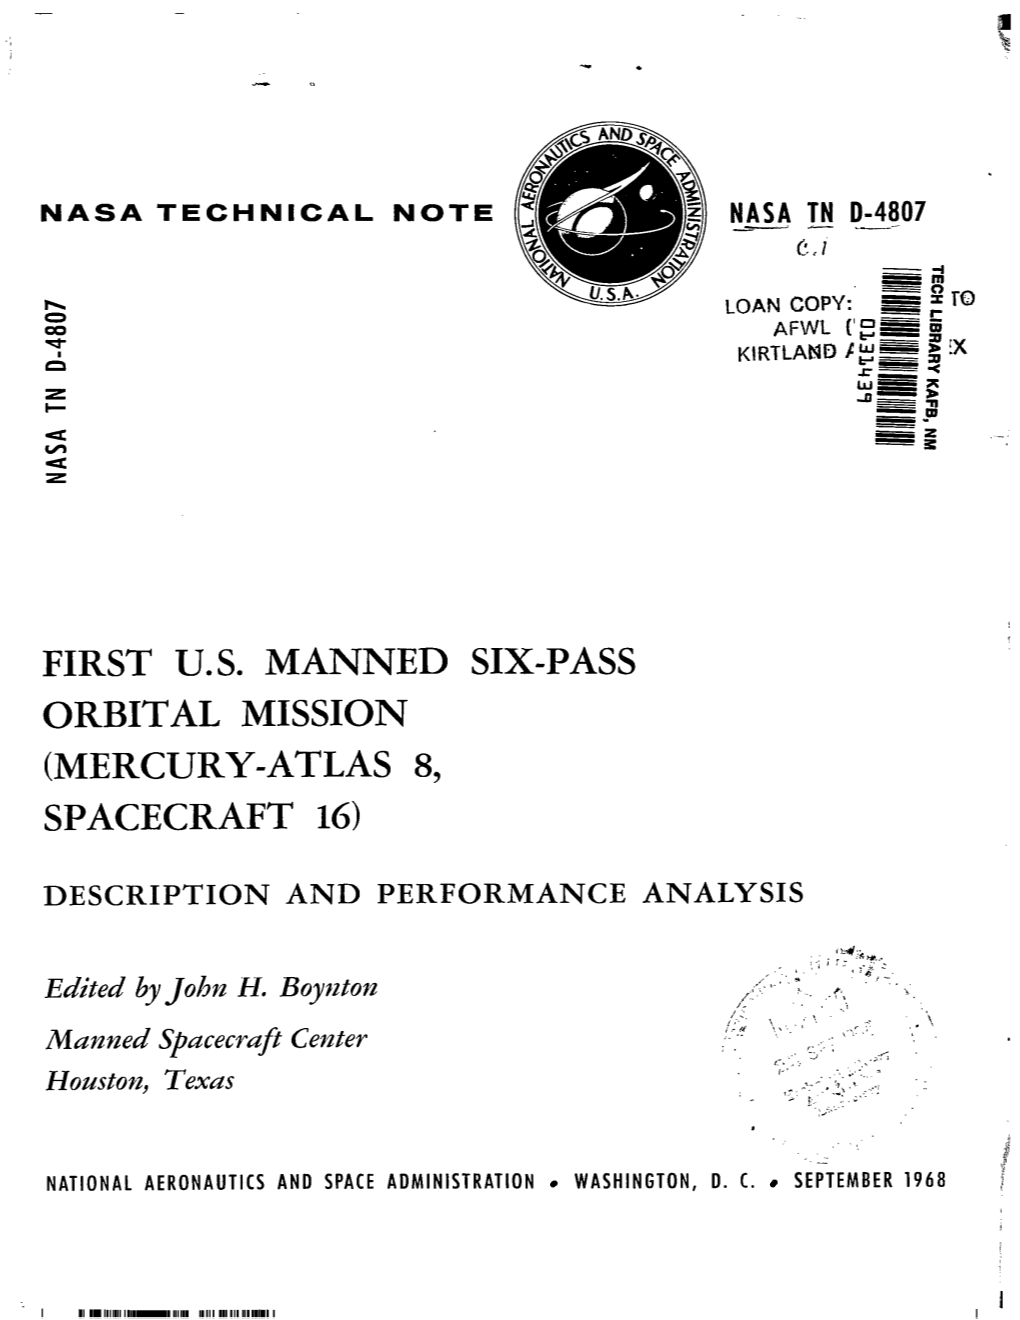 Mercury-Atlas 8, Spacecraft 16)